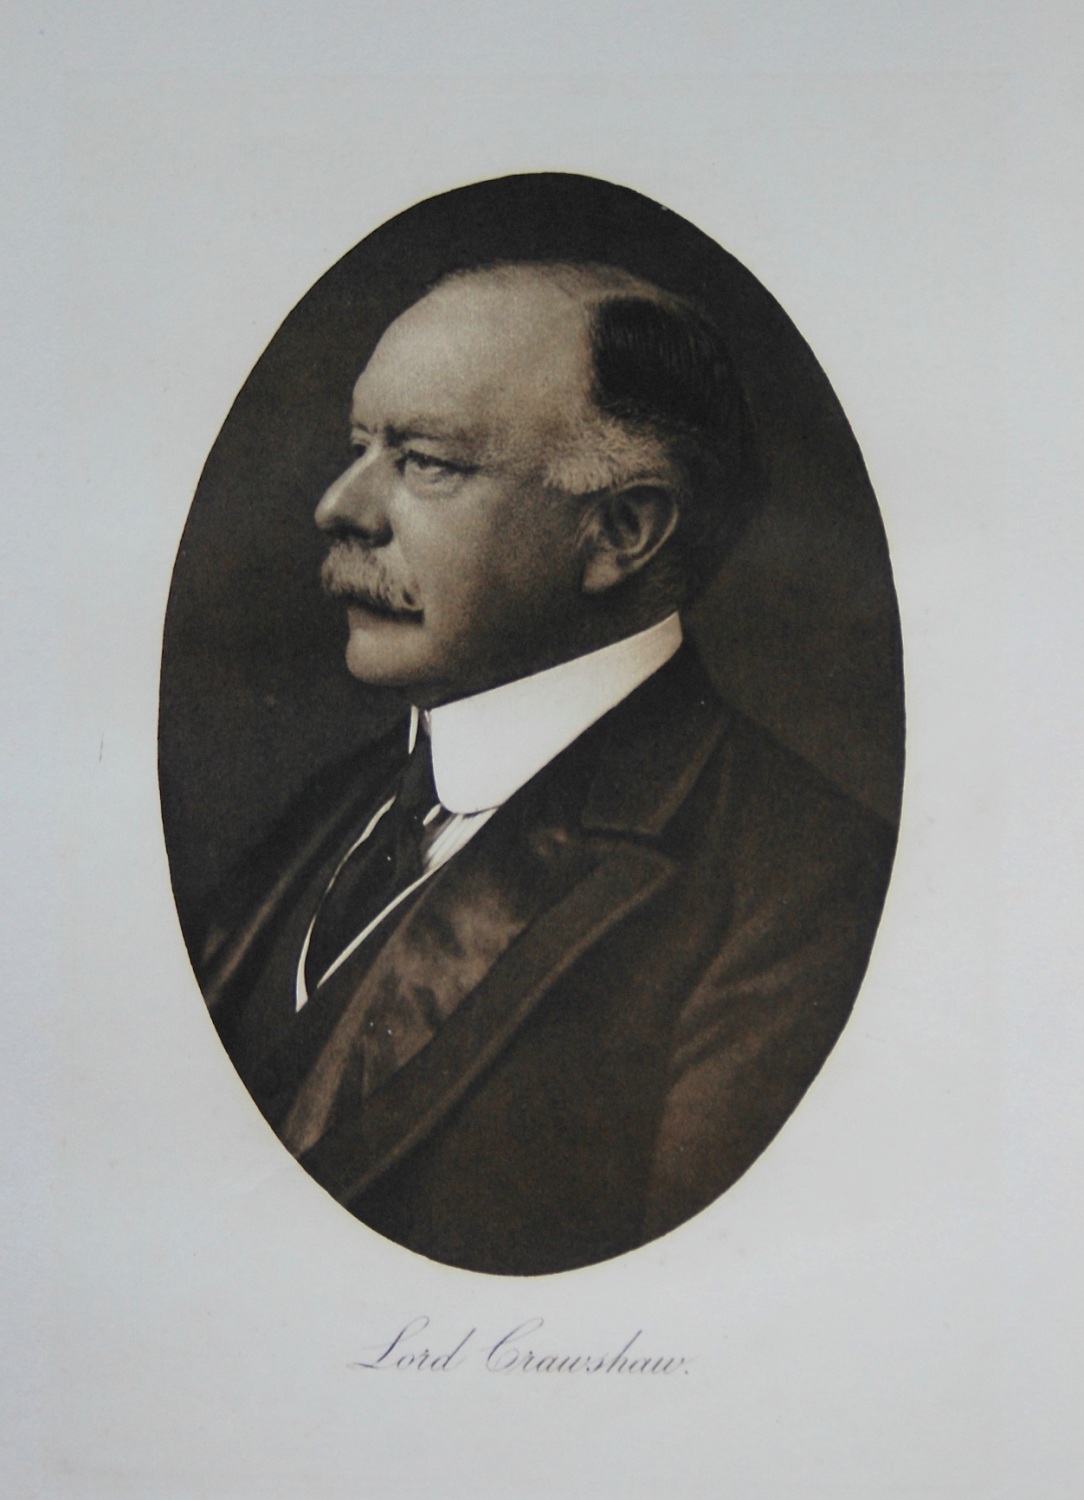 Lord Crawshaw. 1913